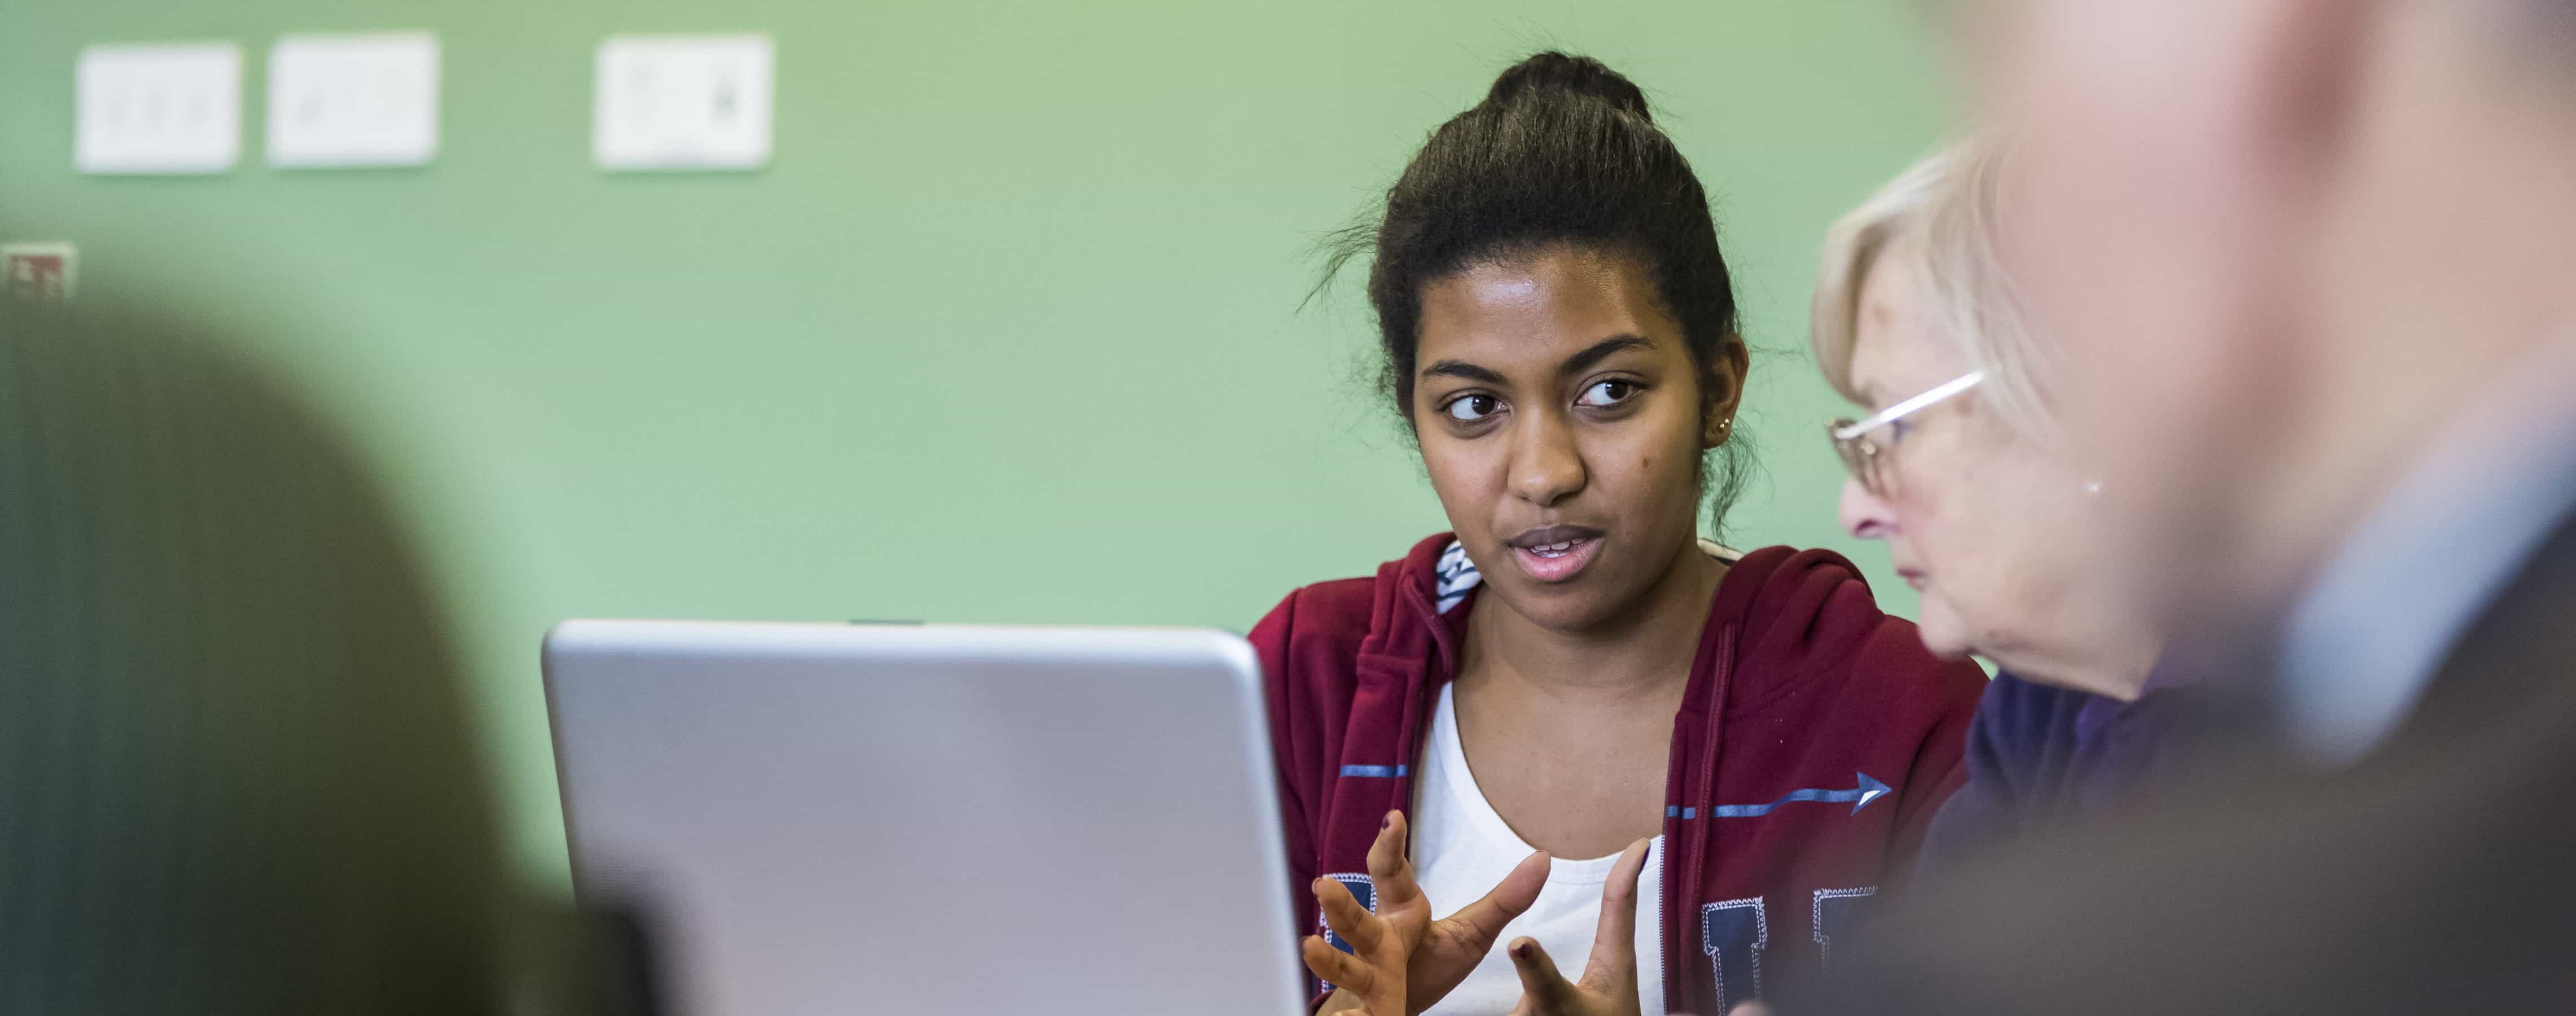 Student Volunteer at Oxford Hub IT Lesson